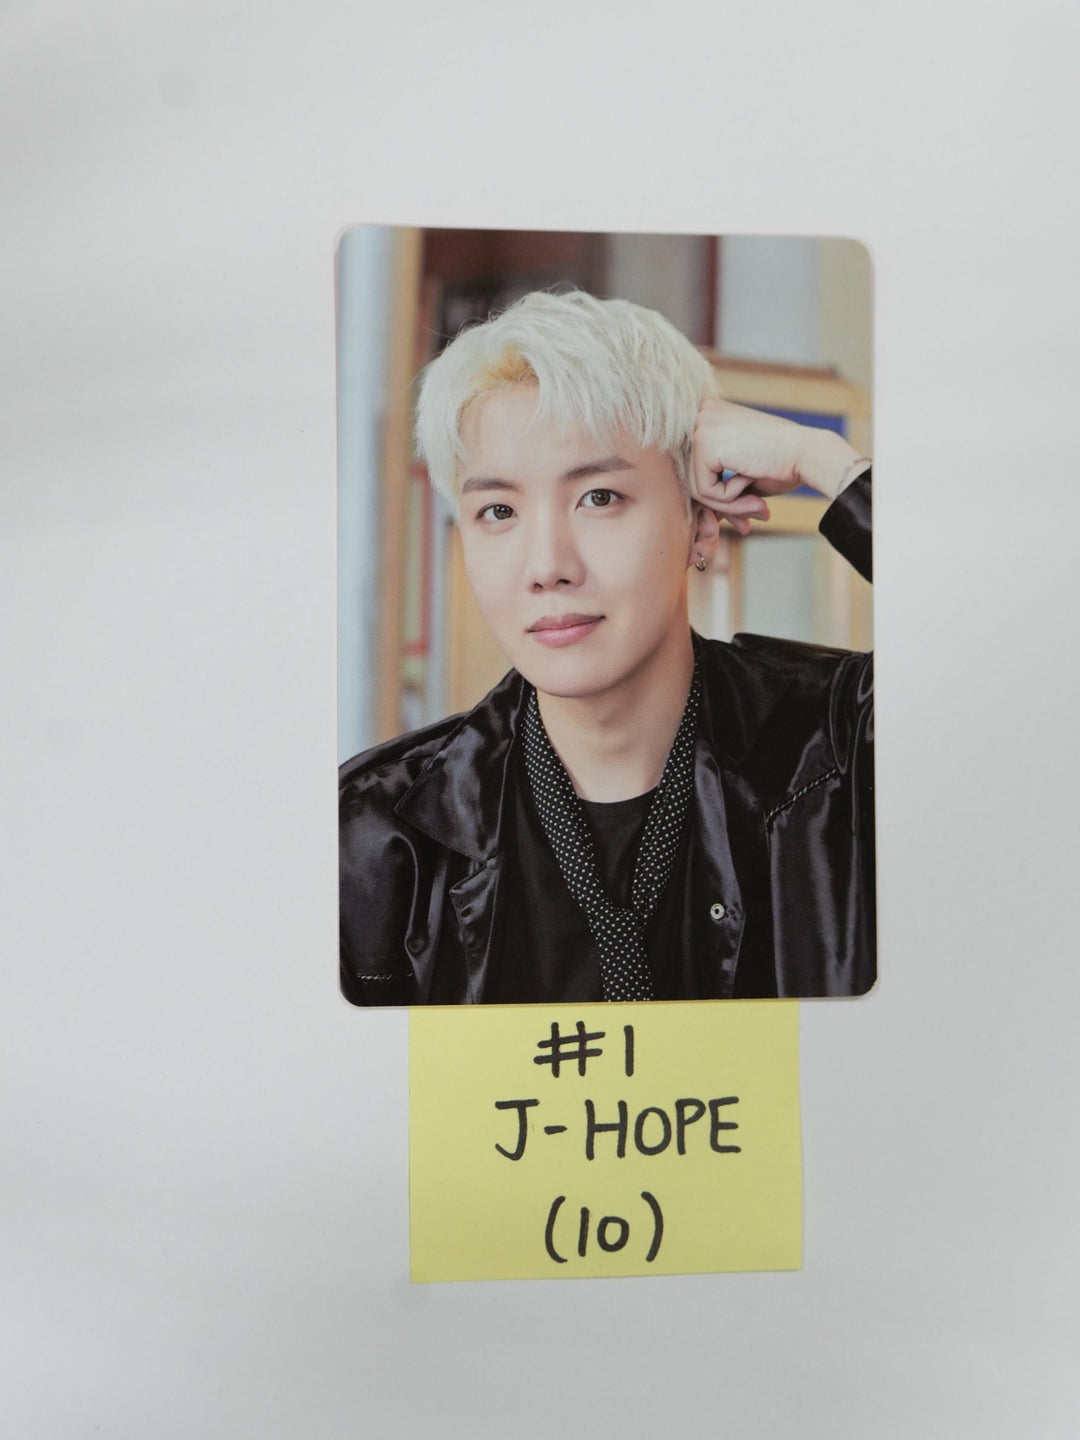 BTS "Permission To Dance" - Weverse Shop Photocard [V,J-Hope]